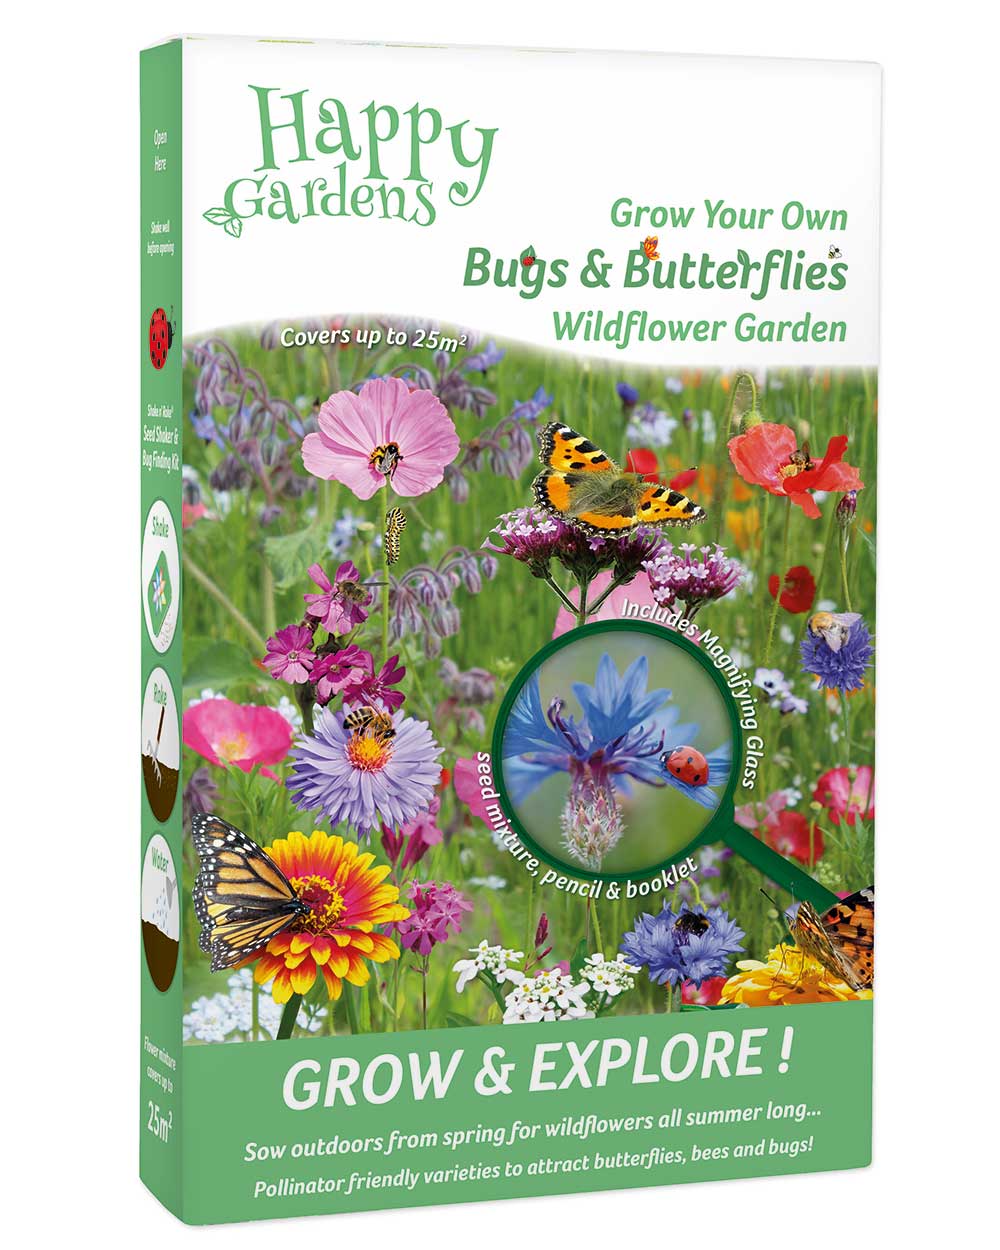 Grow Your Own Wildflower Garden